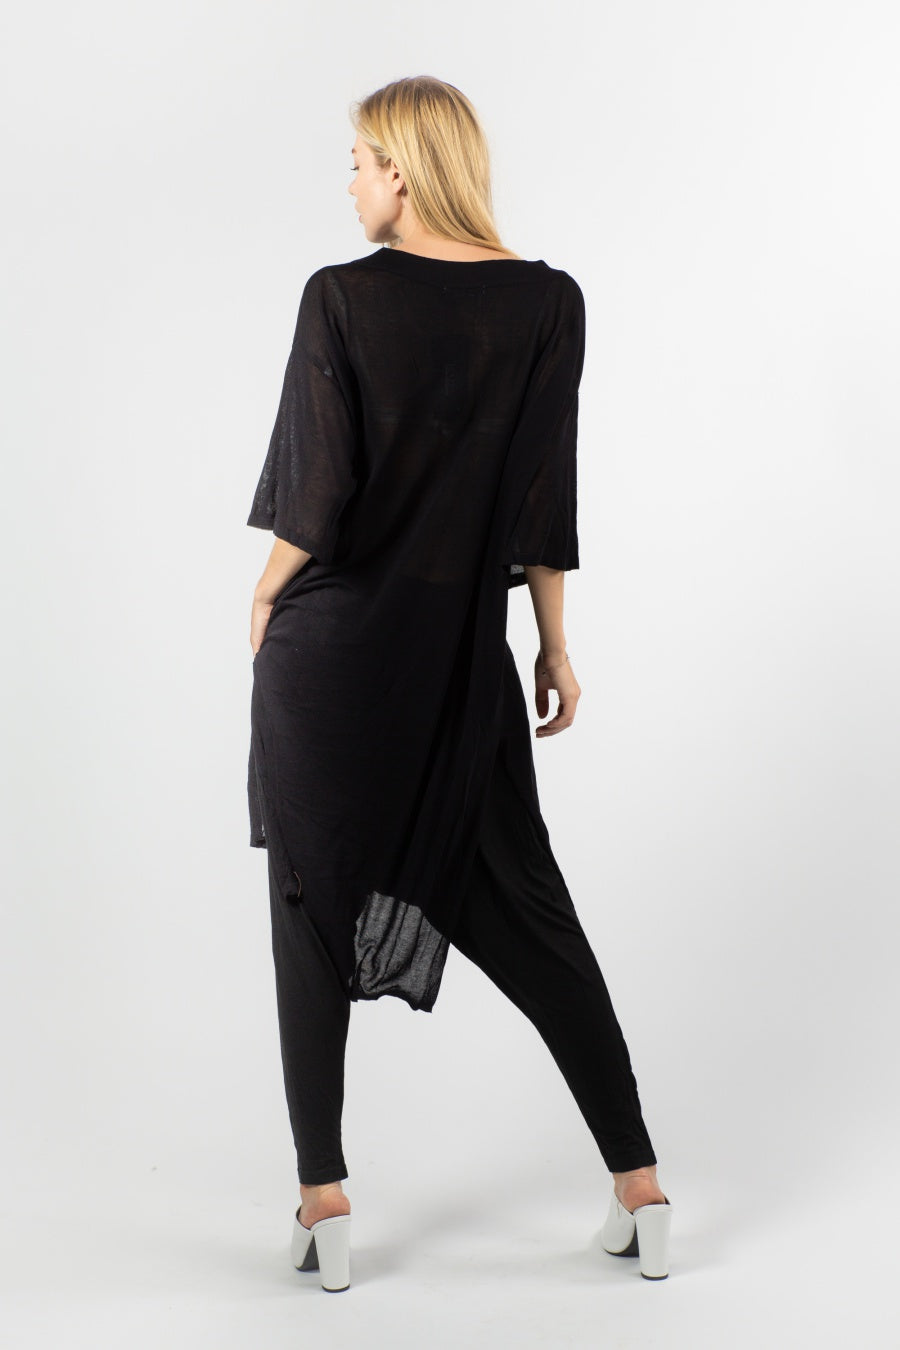 Swoon Basics T-shirt Dress